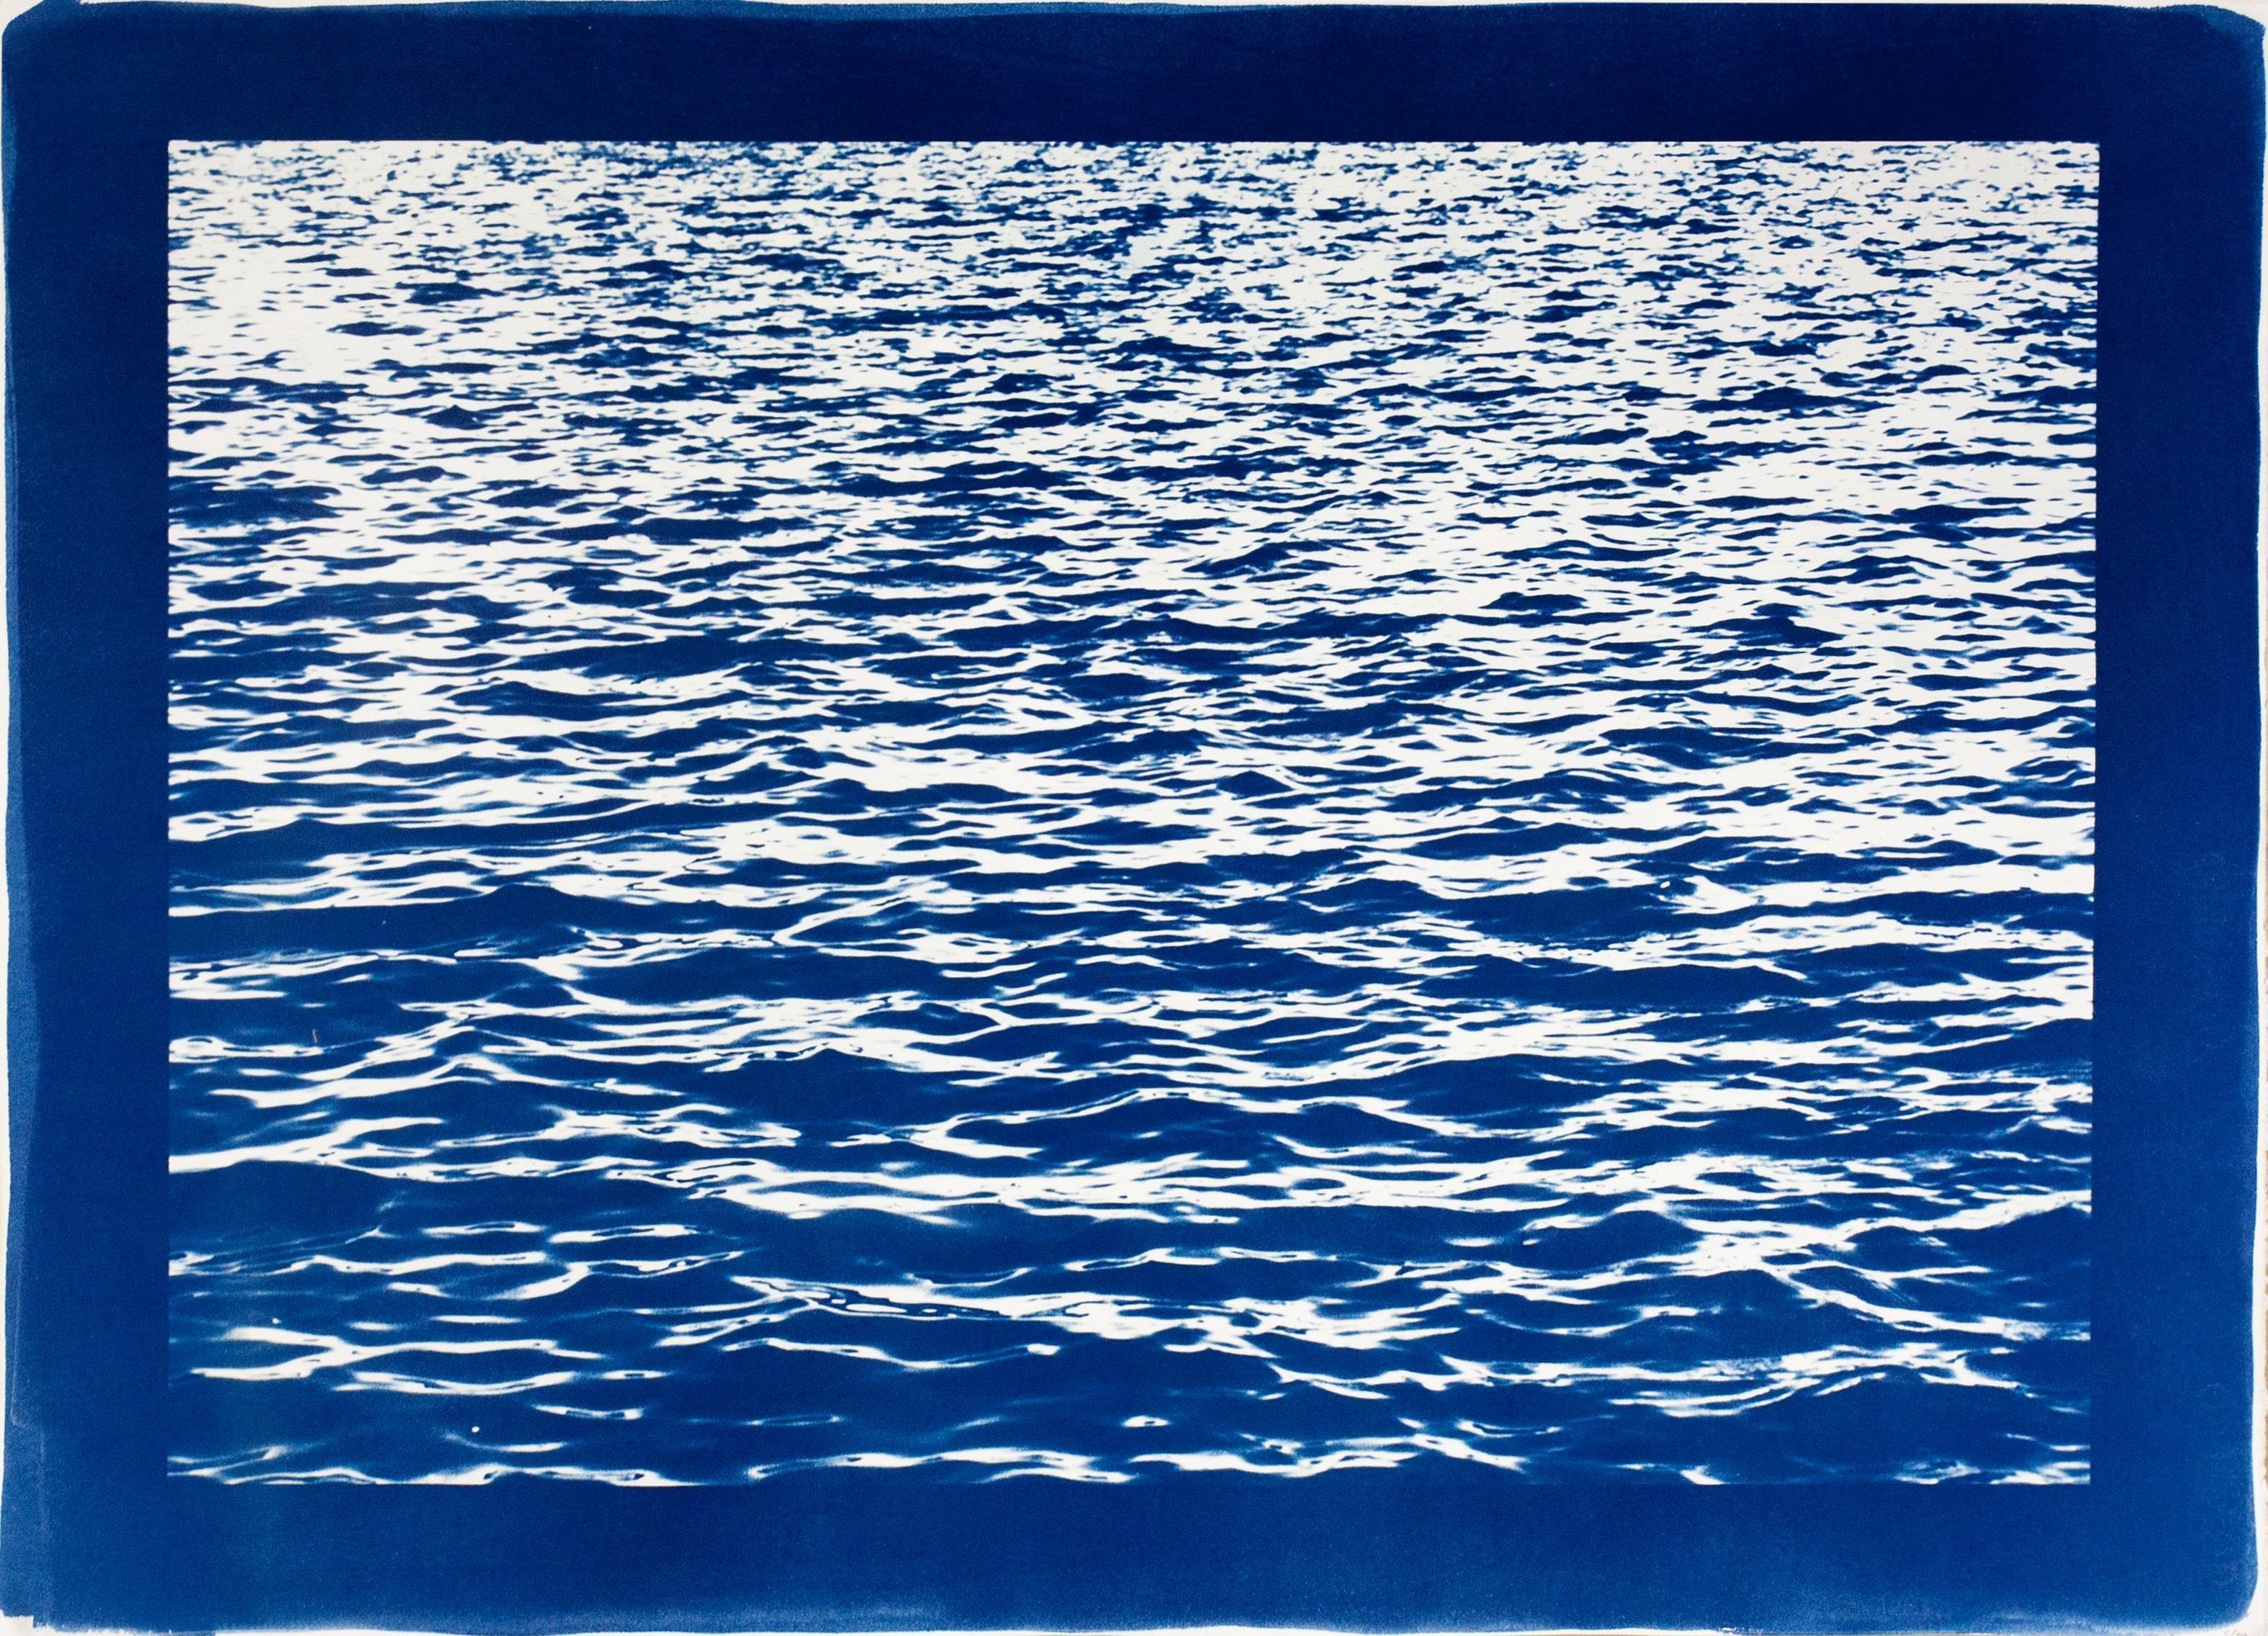 Mediterranean Blue Sea Waves, Handmade Cyanotype Print, 100x70cm, Calm Seascape